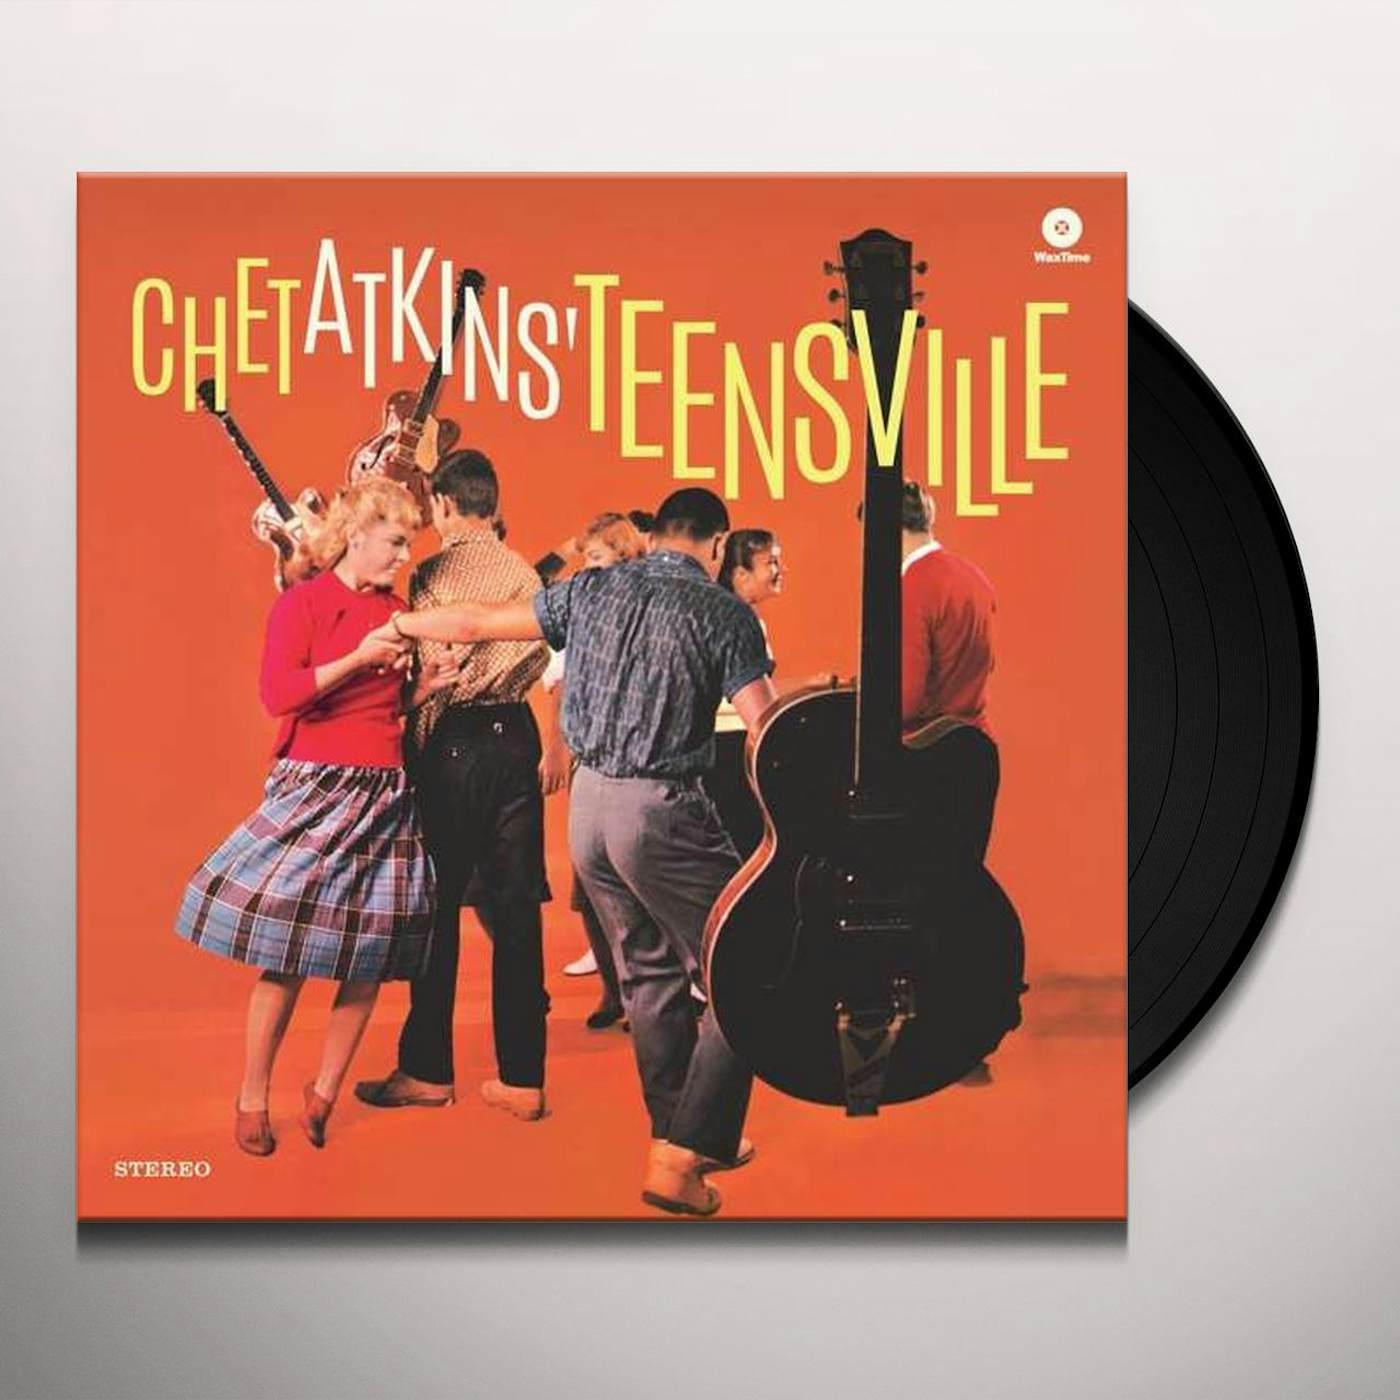 Chet Atkins TEENSVILLE (BONUS TRACKS) Vinyl Record - Limited Edition, 180 Gram Pressing, Remastered, Spain Release